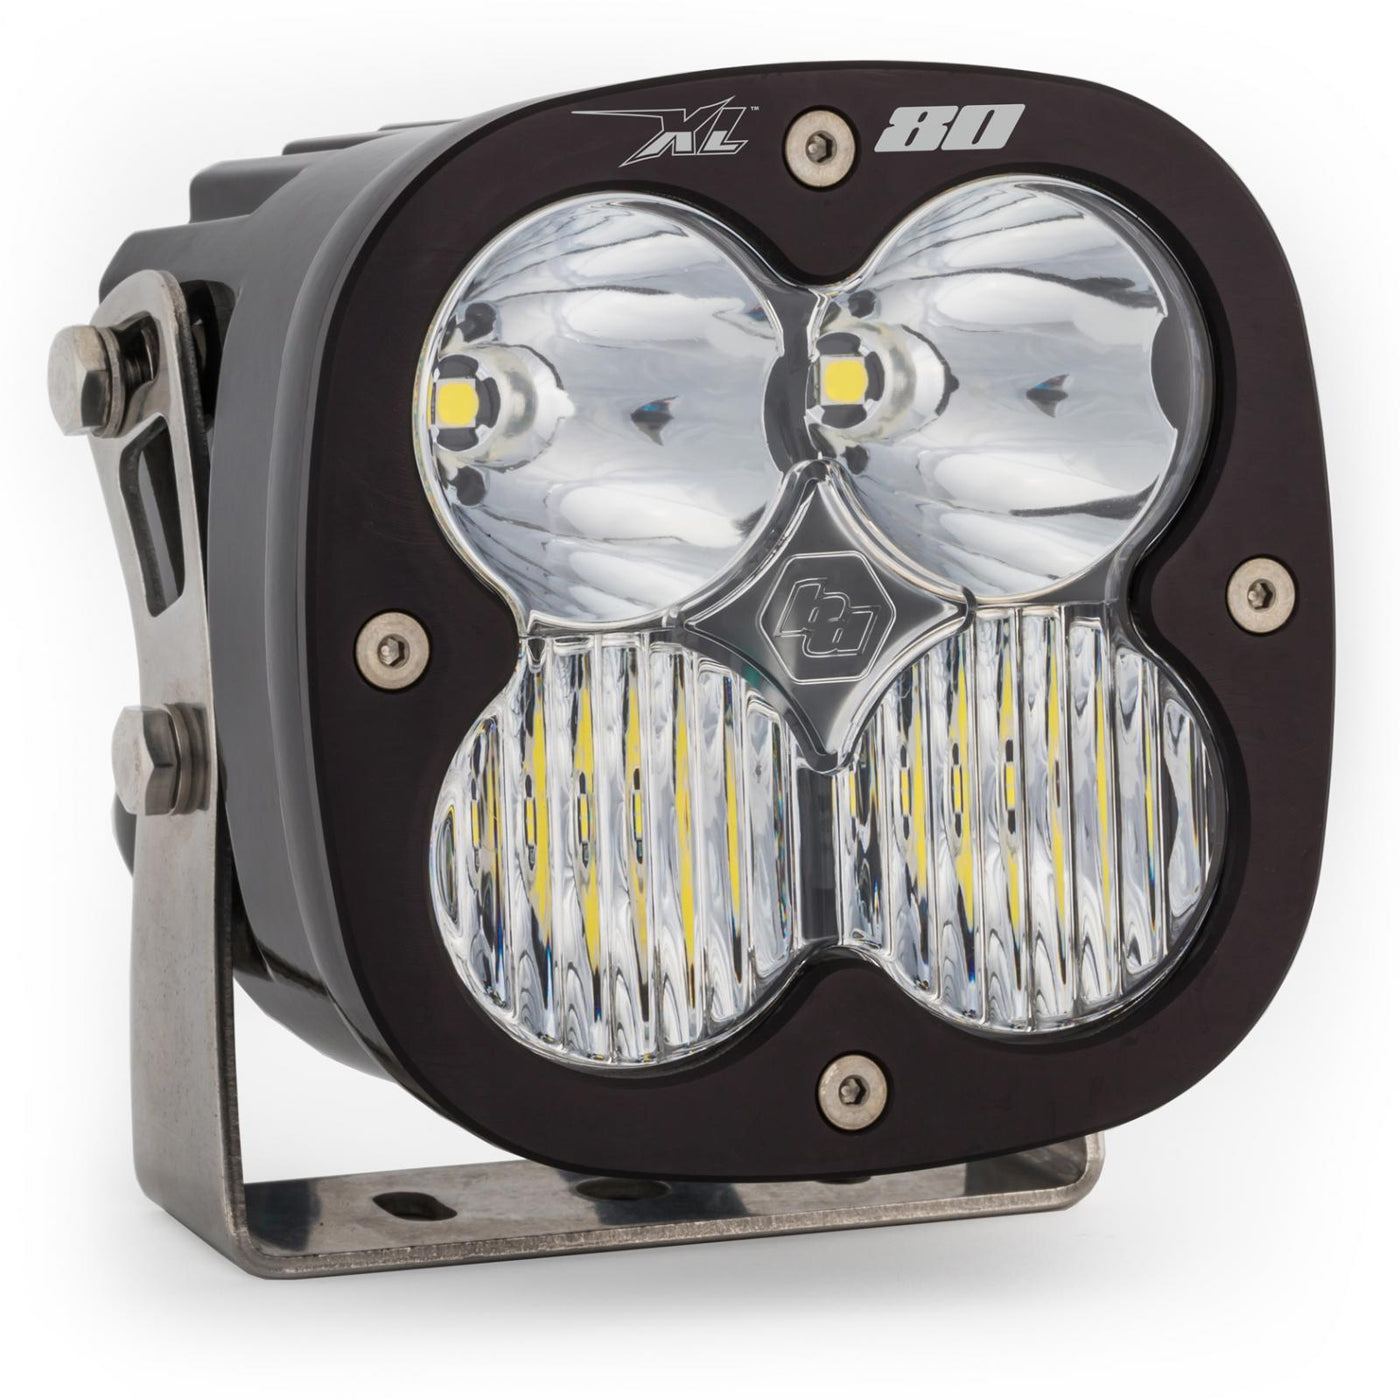 Baja Designs 670003 LED Light Pods Clear Lens Spot XL80 Driving/Combo